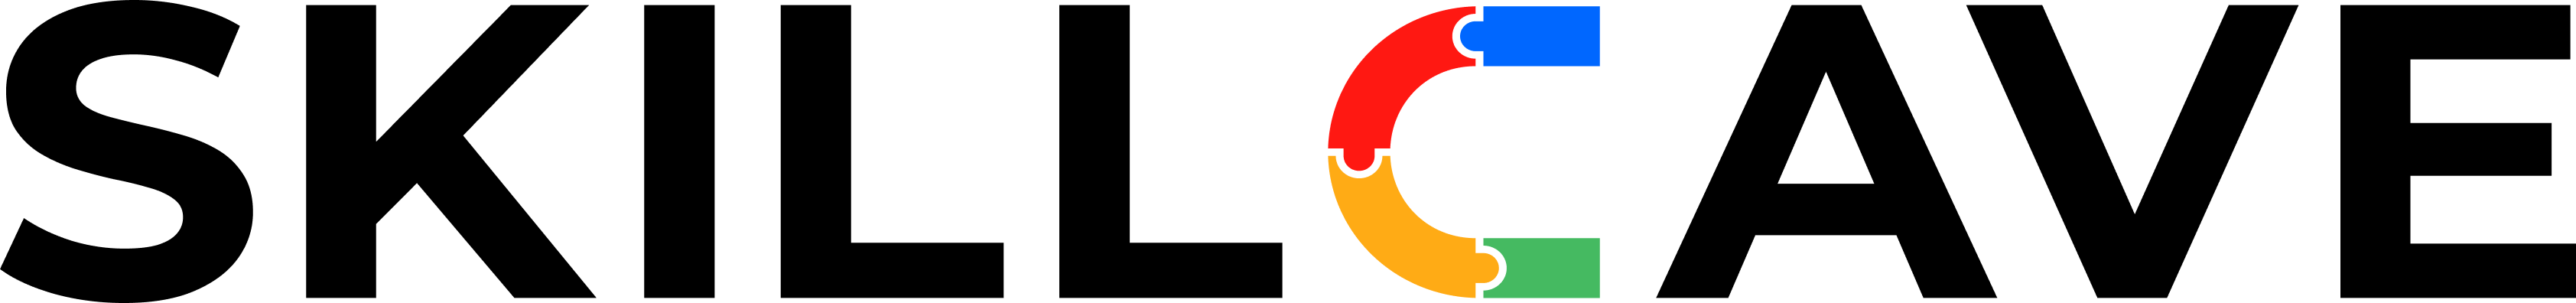 SKILLCAVE logo